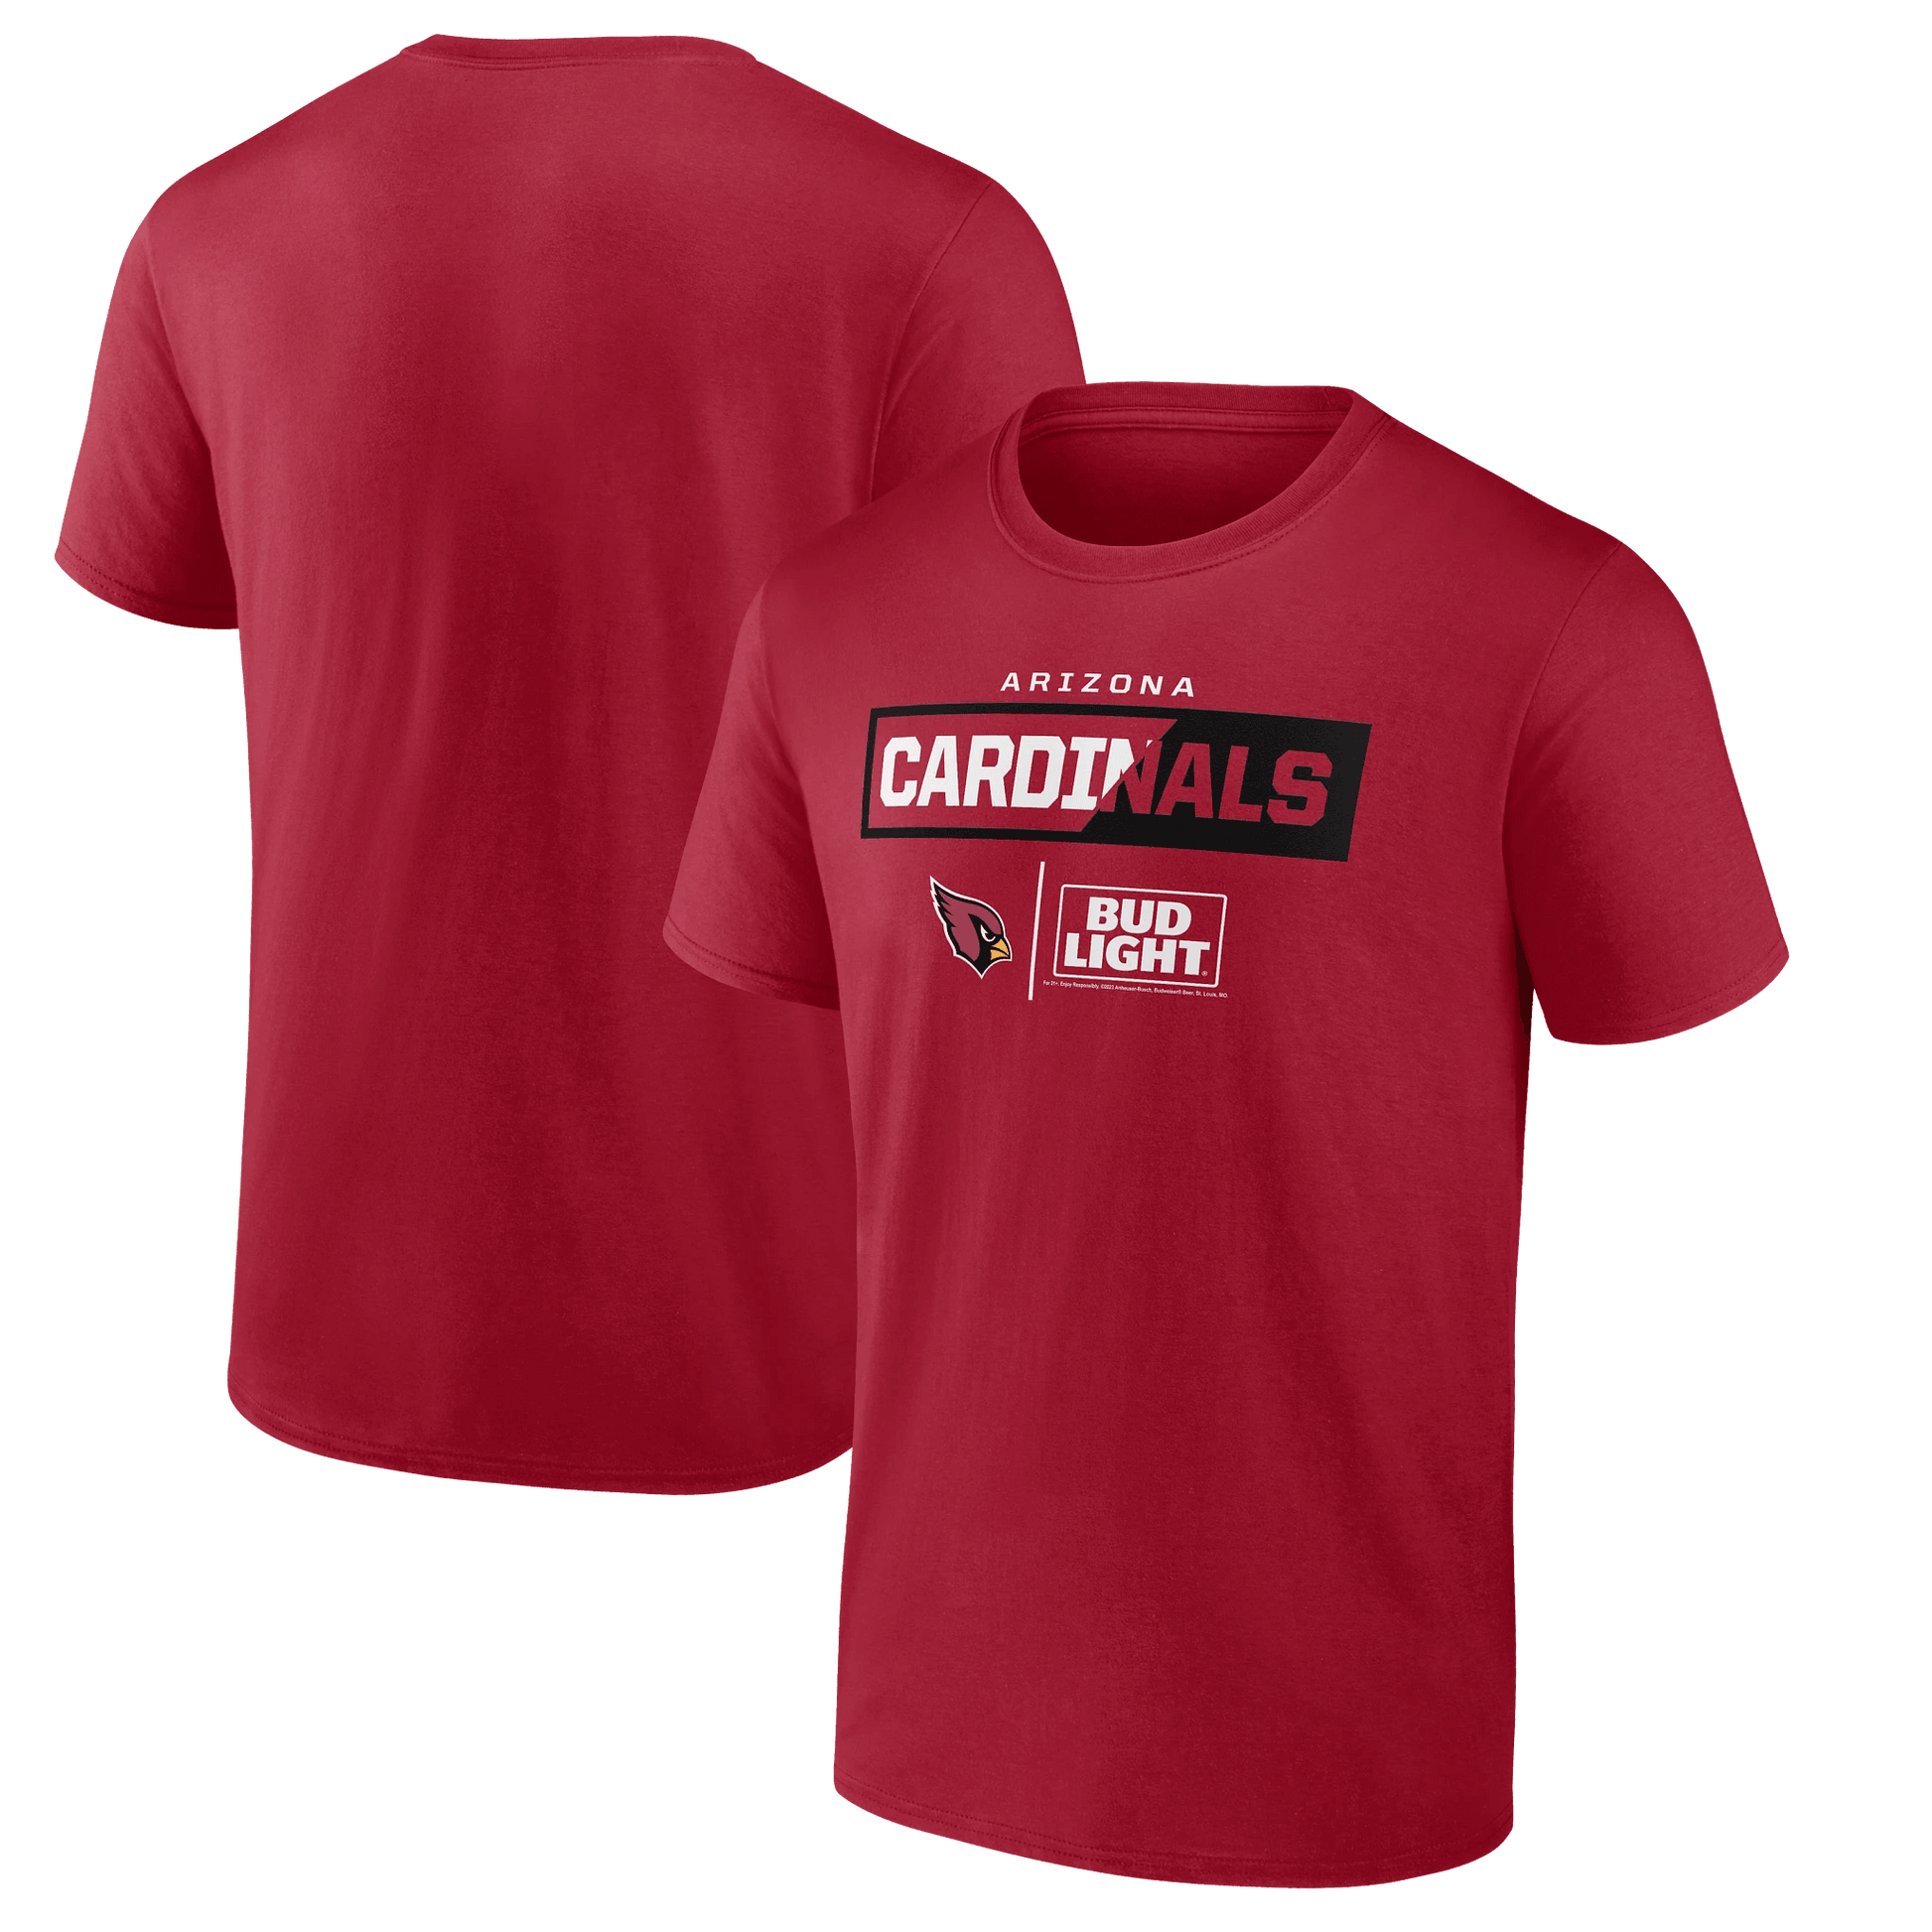 Bud Light Arizona Cardinals T-shirt front/back